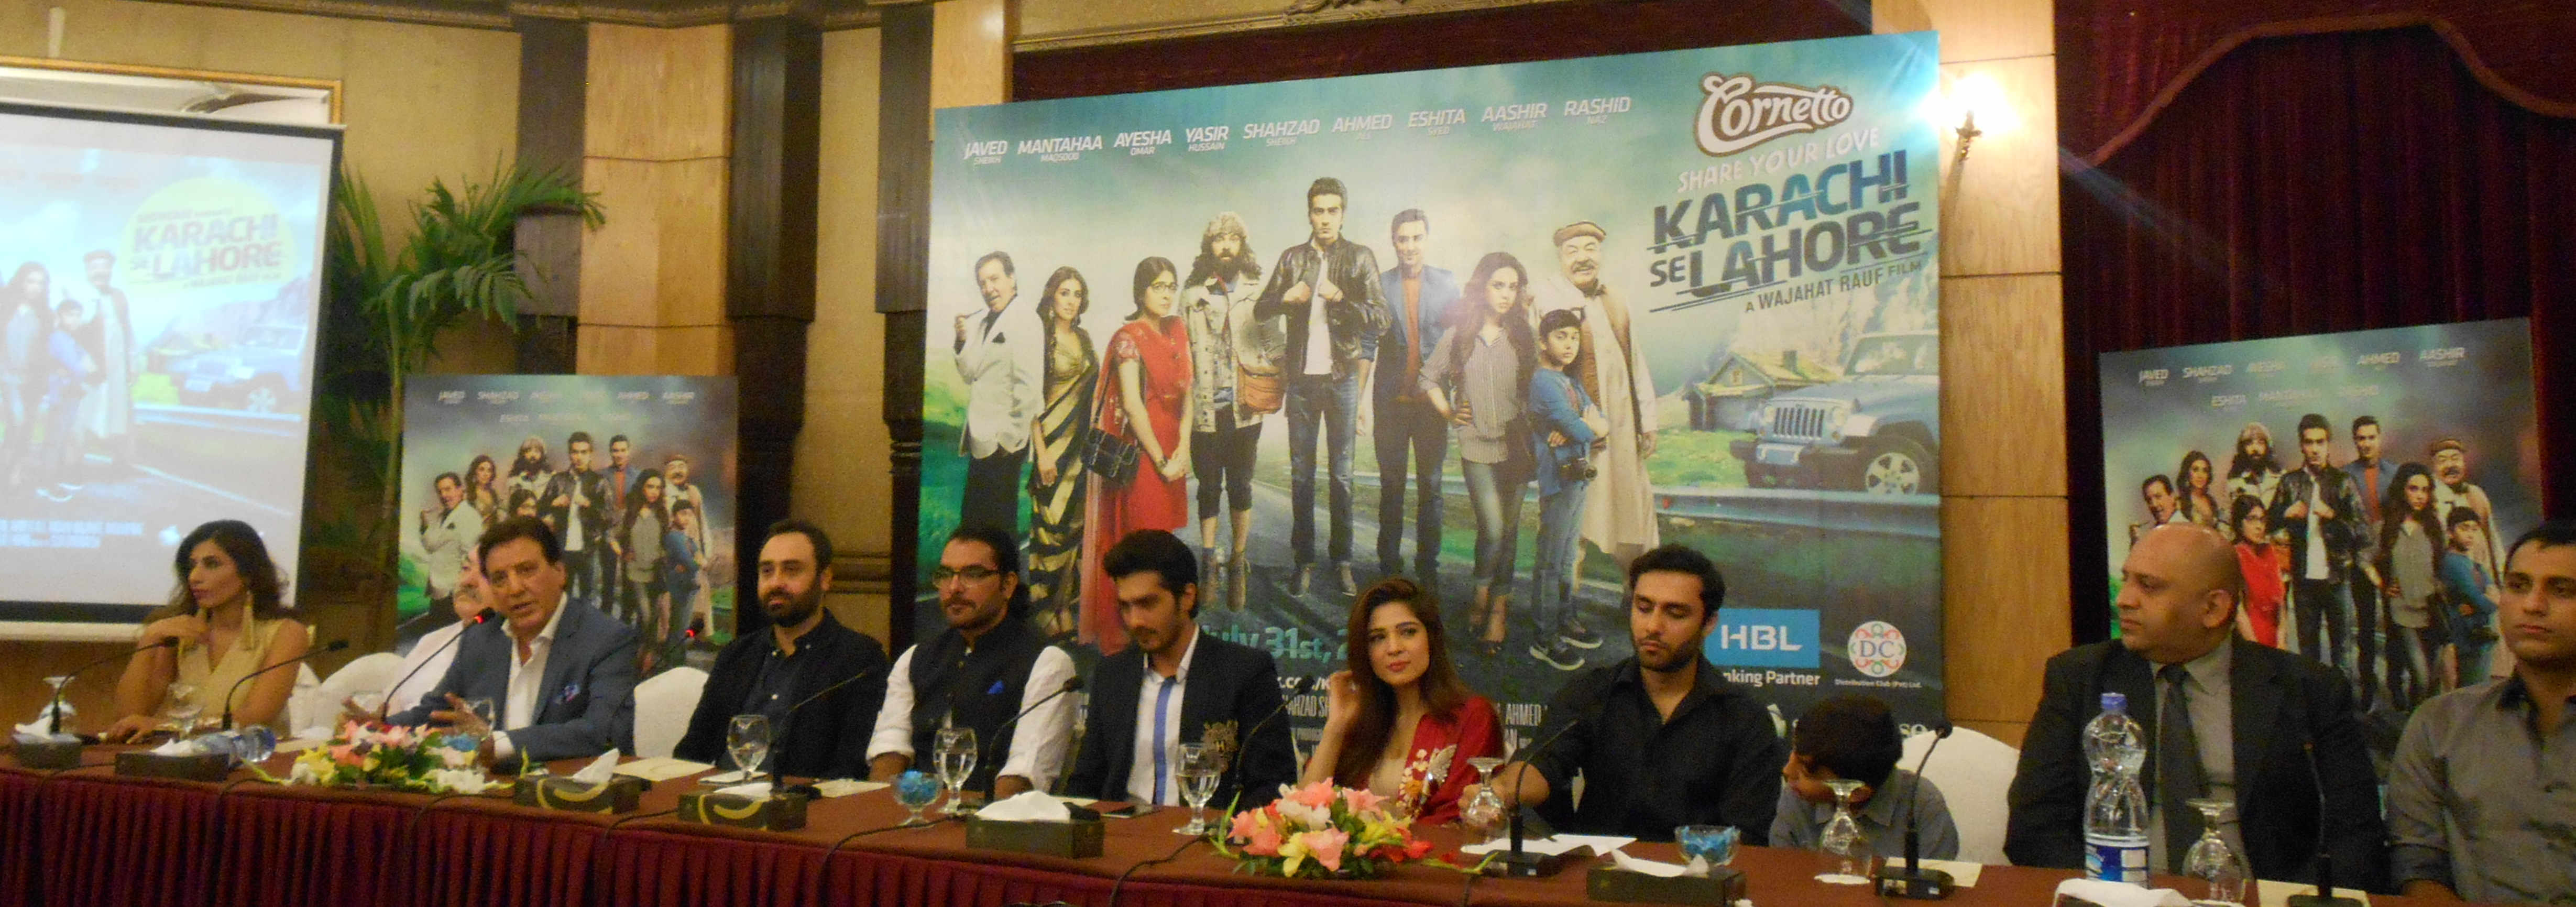 Karachi Se Lahore - Cast and Crew